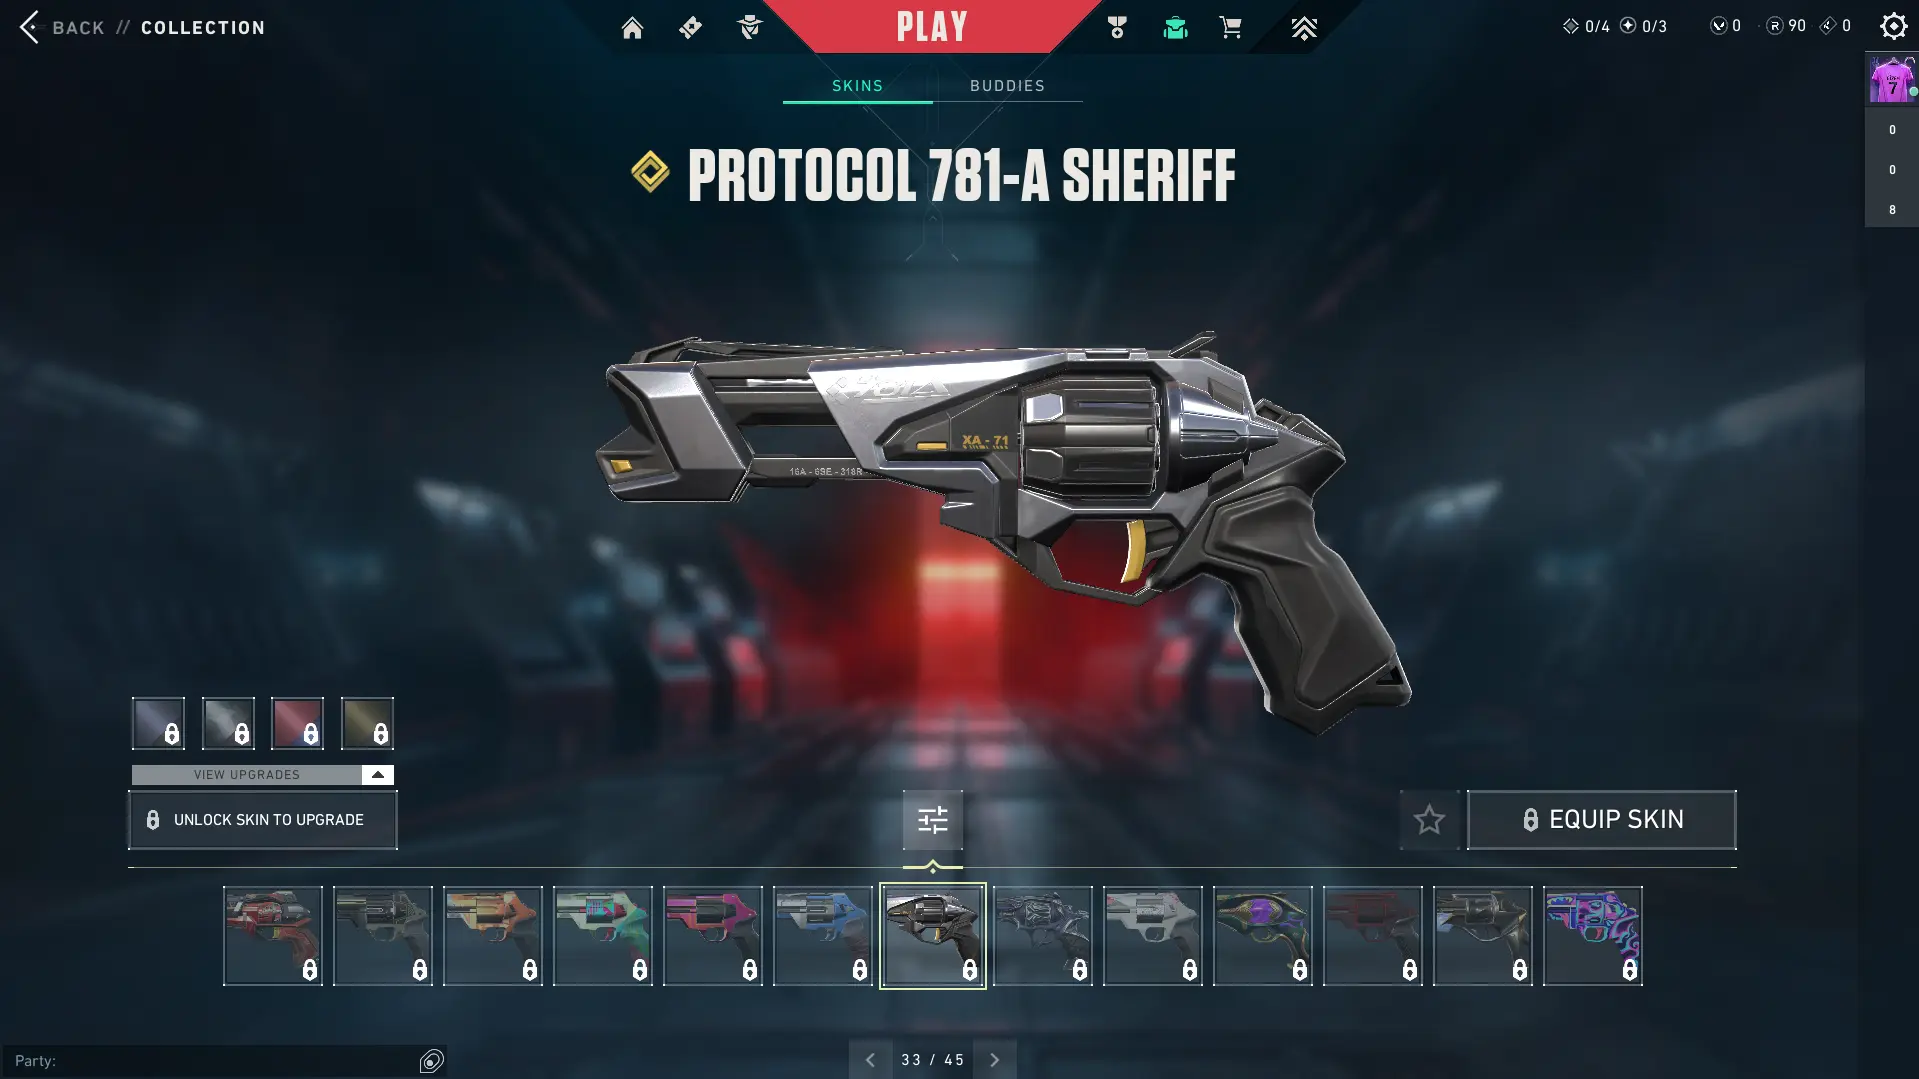 Protocol 781-A Sheriff